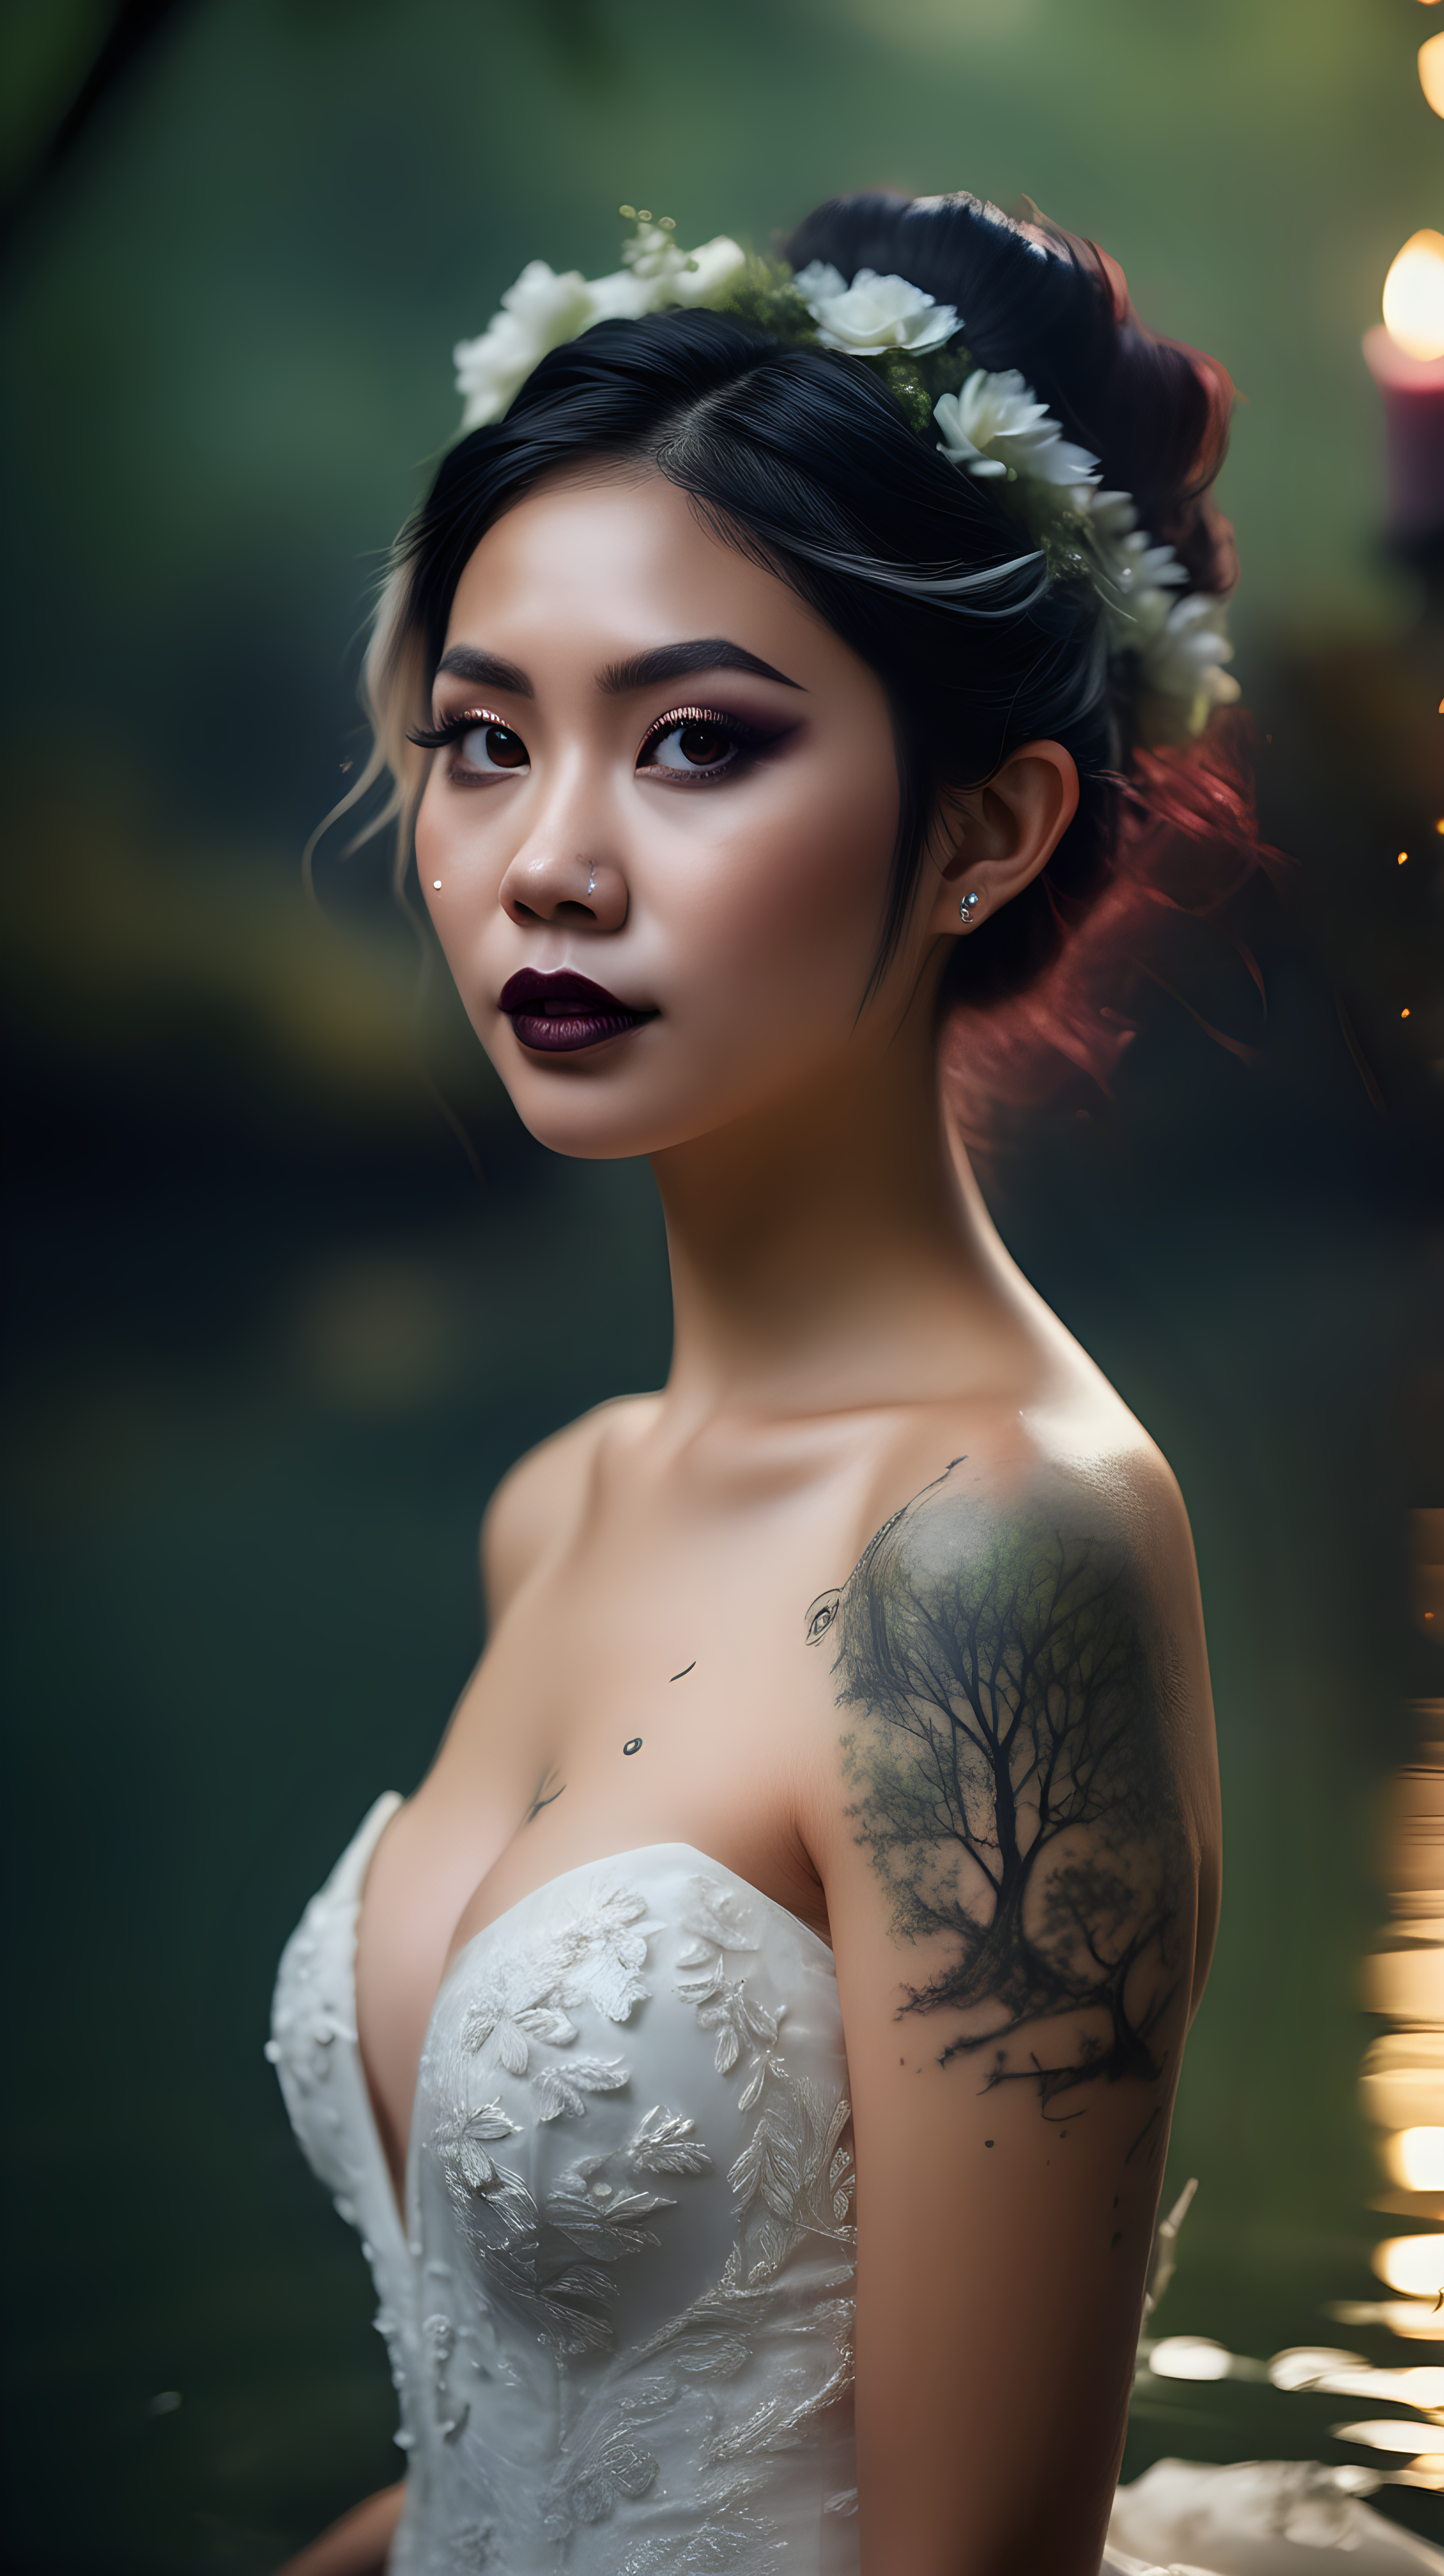 Beautiful Vietnamese woman with elf ears body tattoos